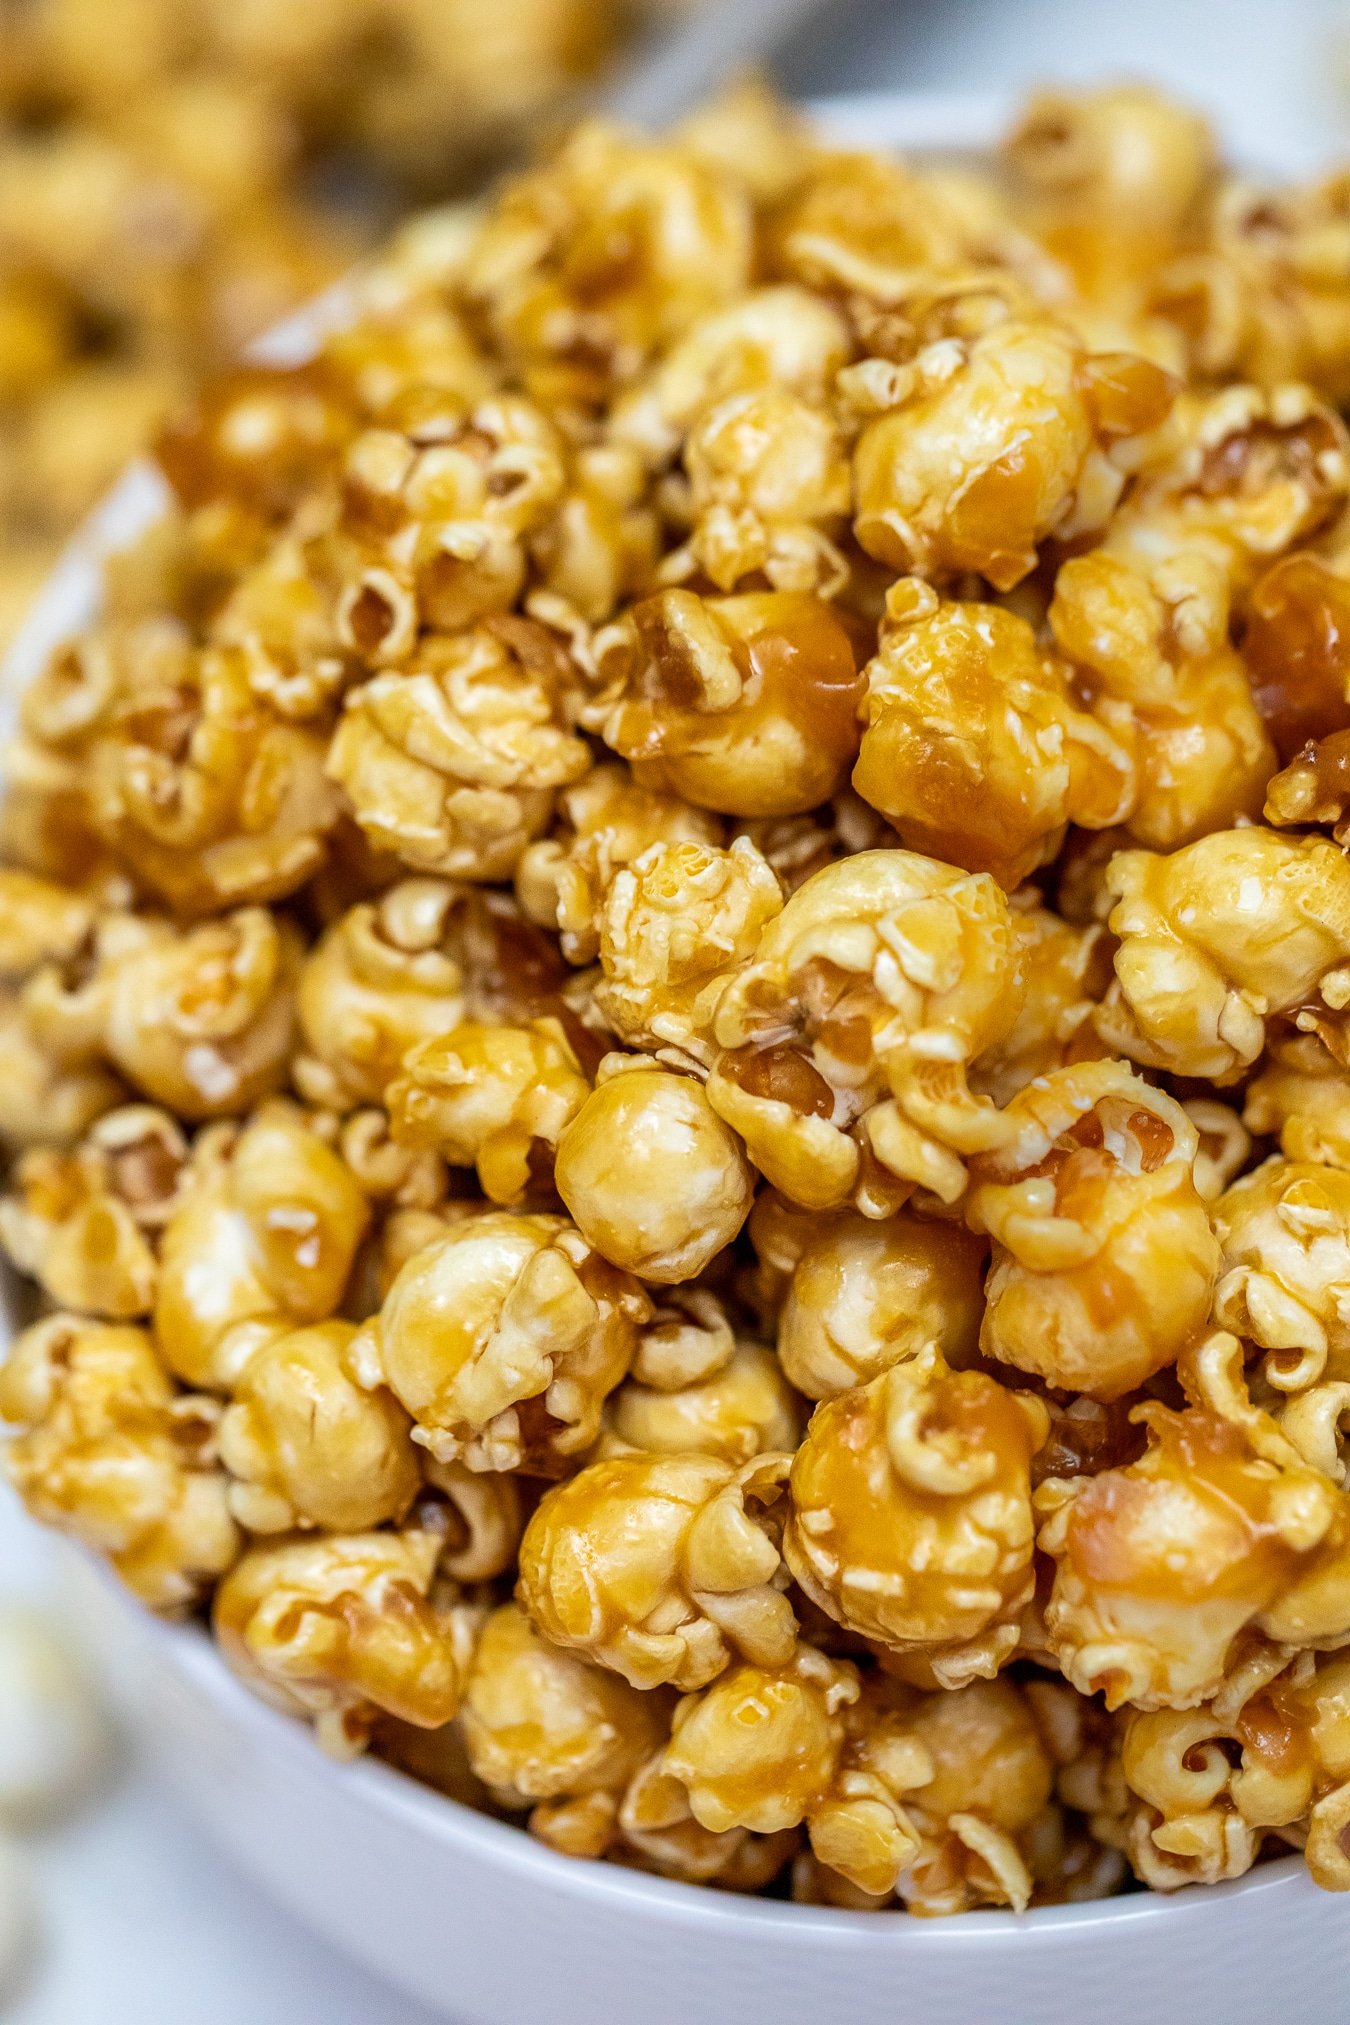 Homemade Caramel Popcorn Recipe [Video] - S&SM